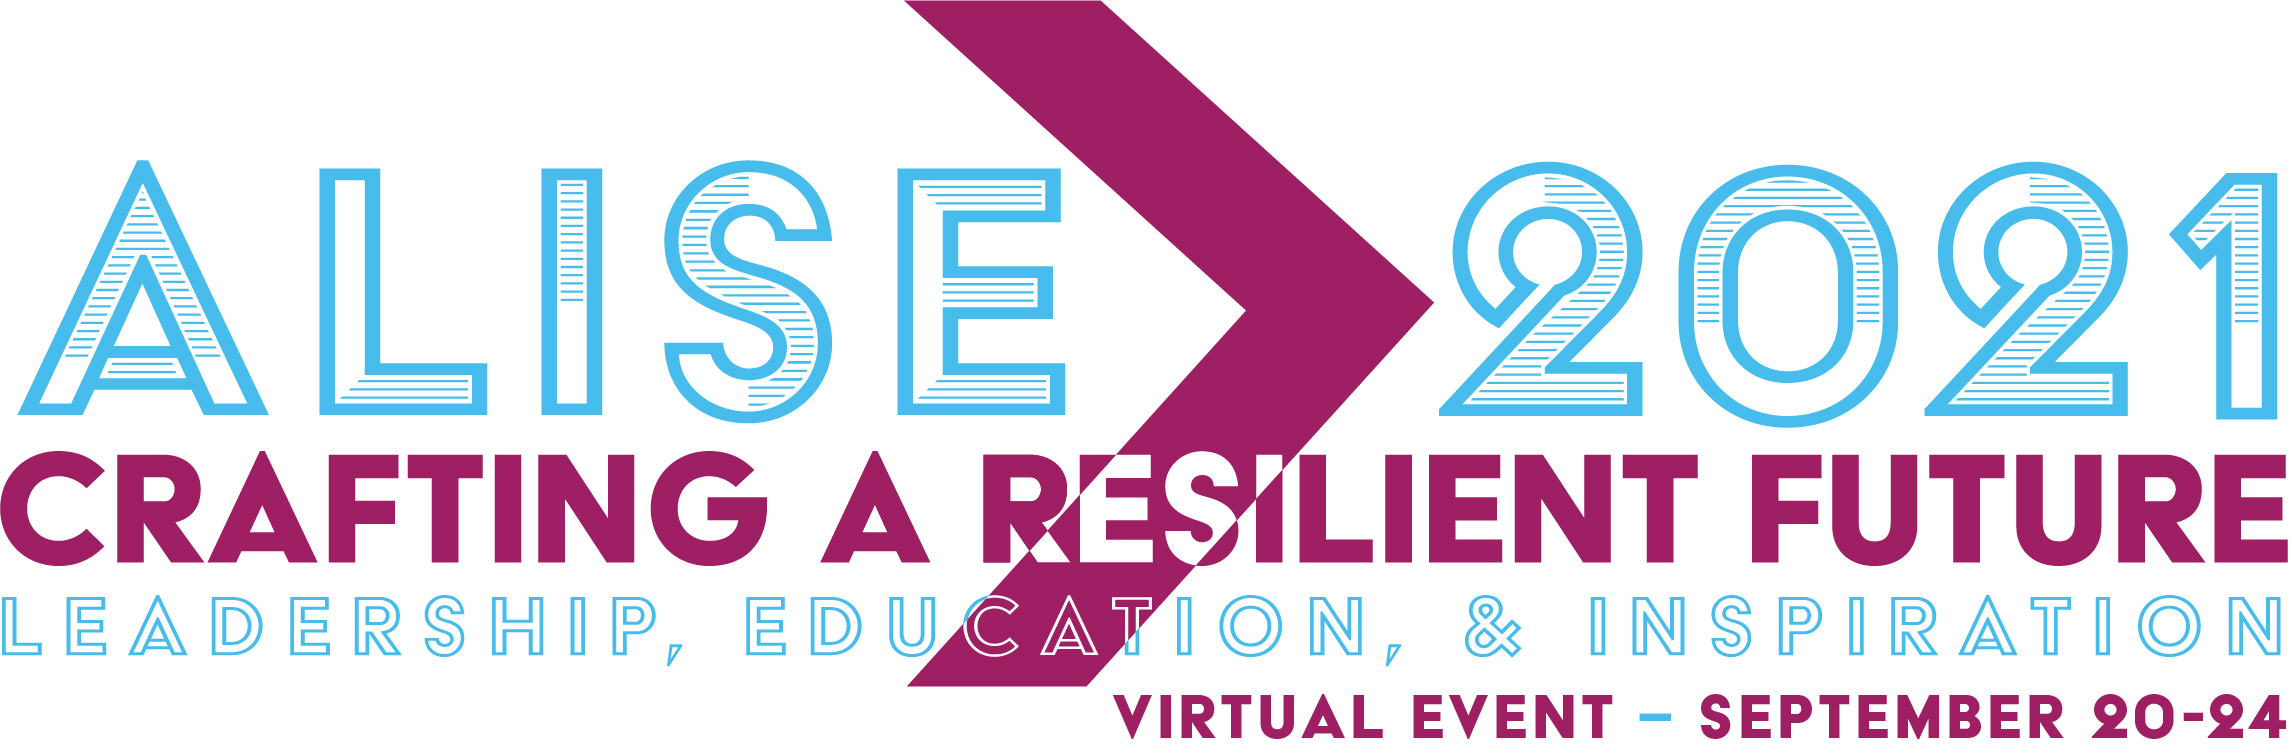 ALISE '21 Virtual Conference Logo